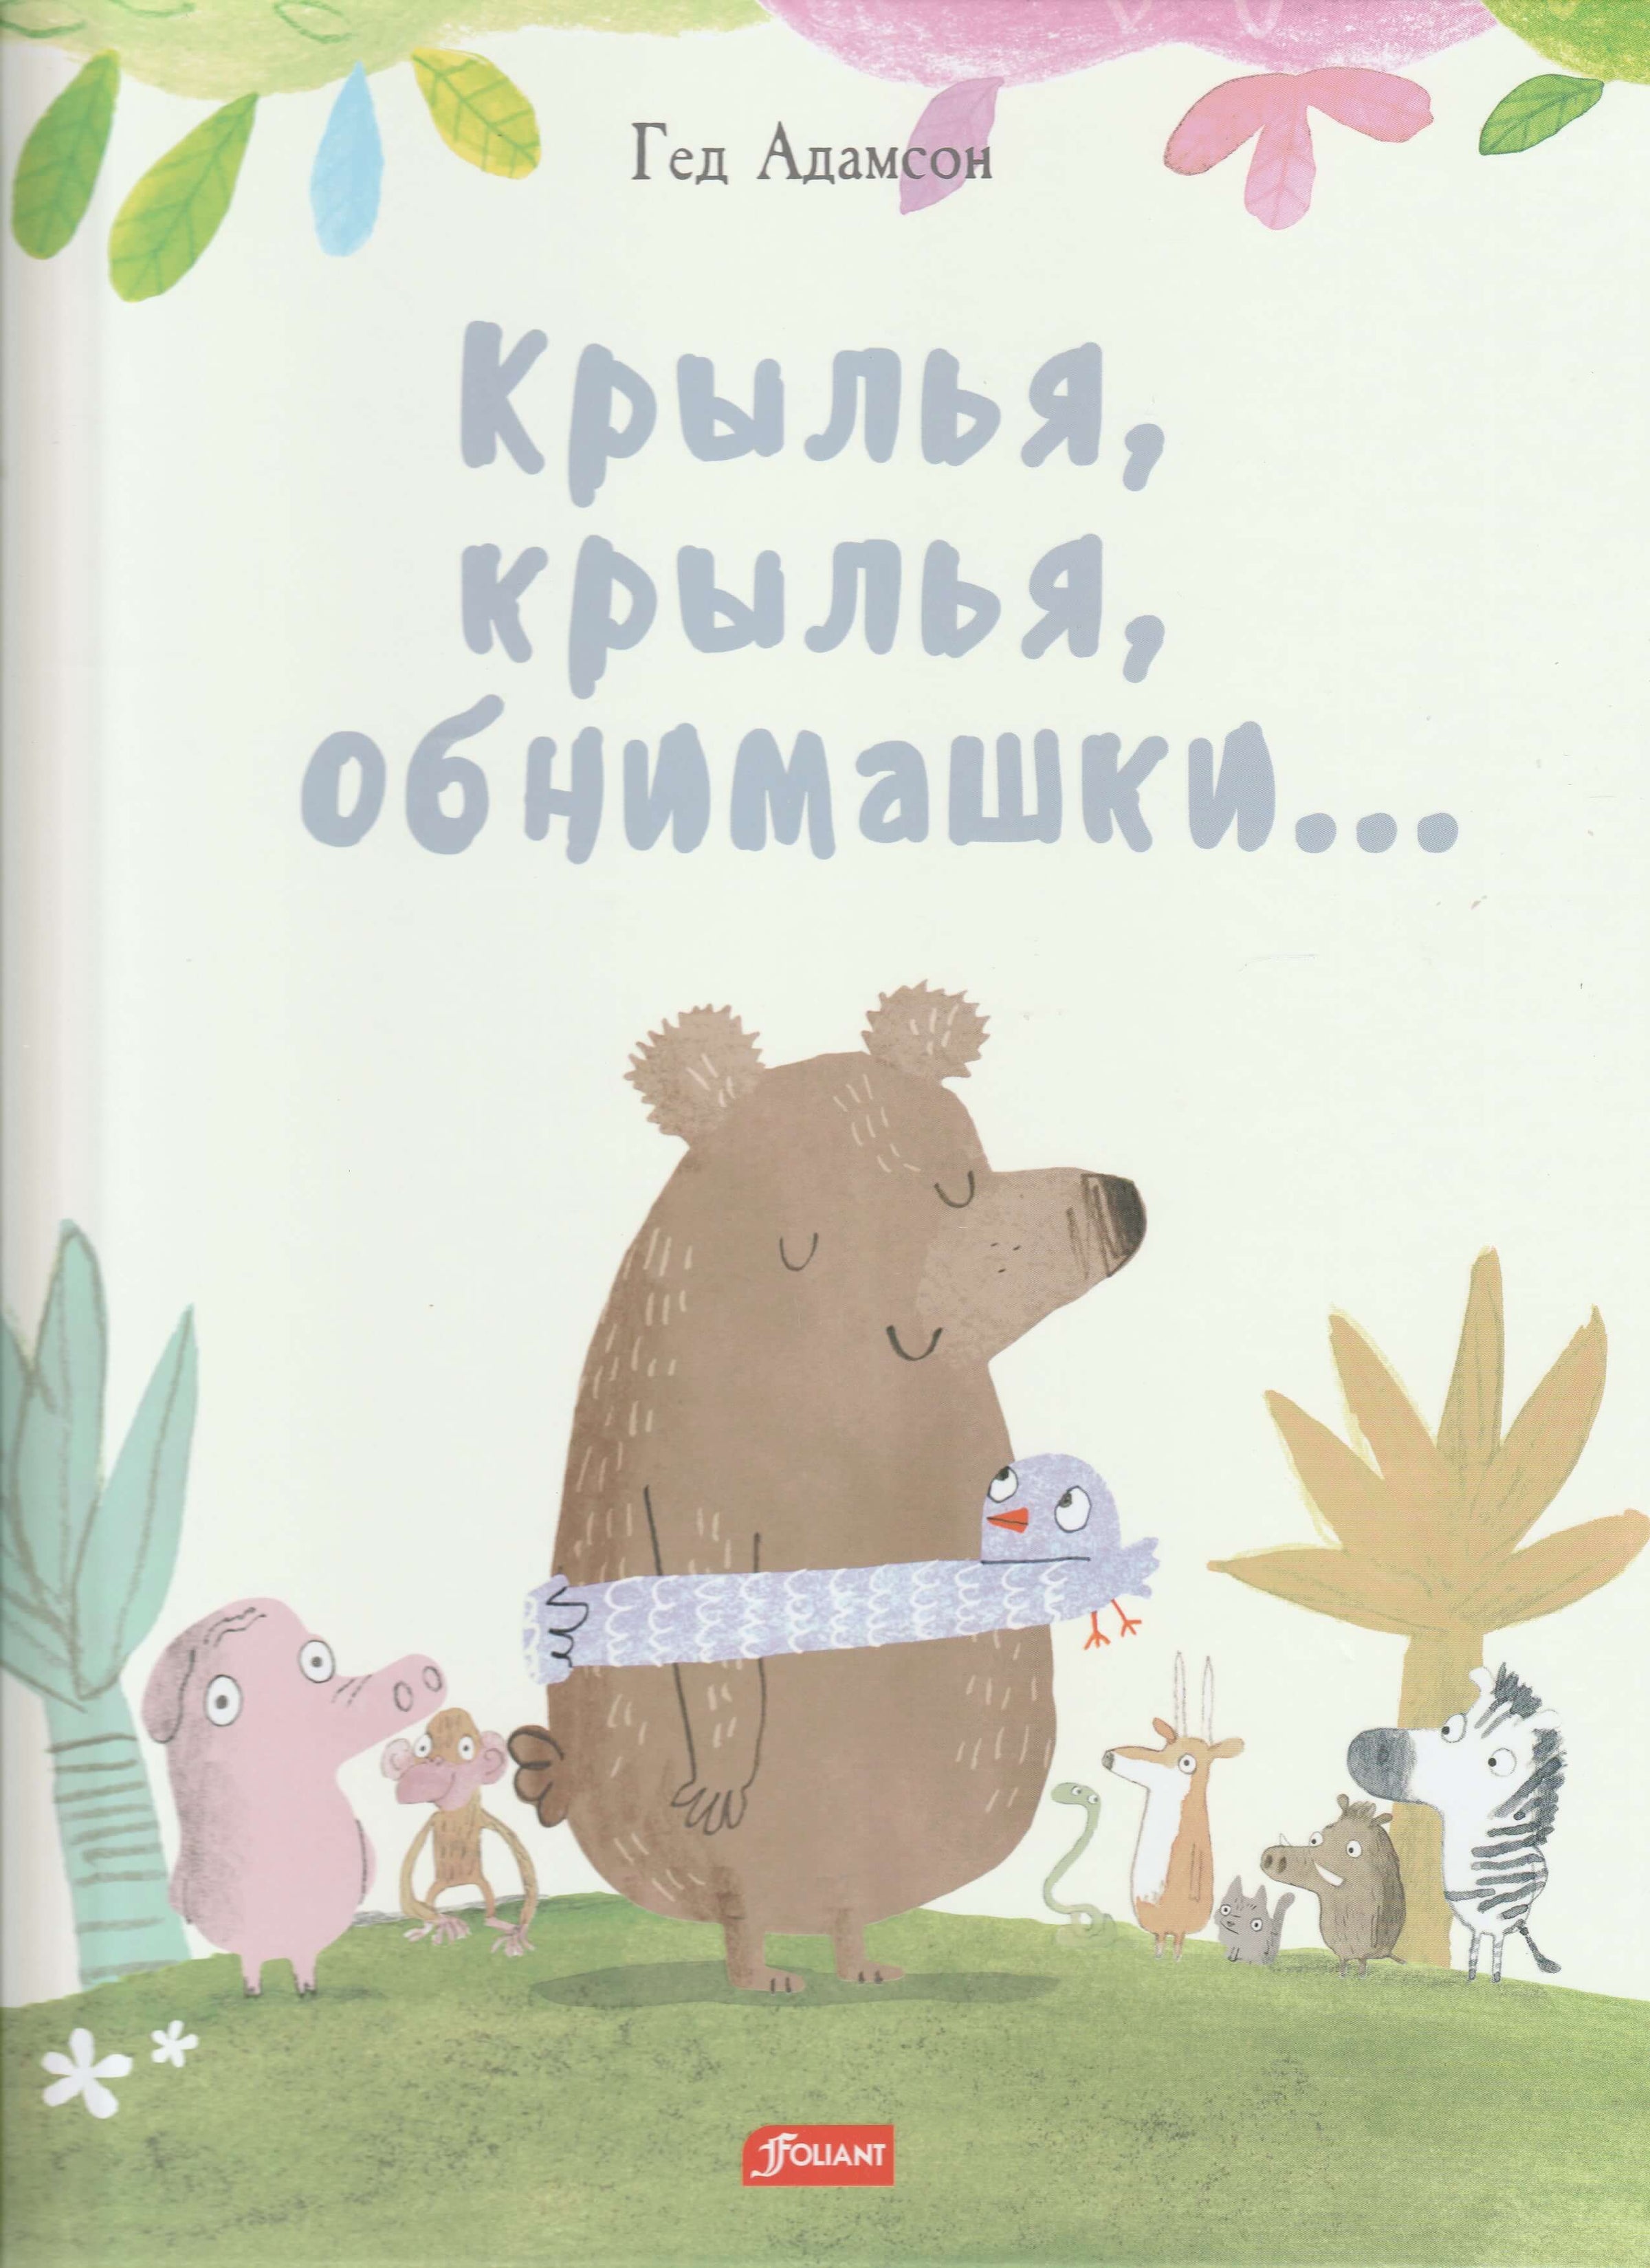 Colection Image for "От 3 до 6 лет"